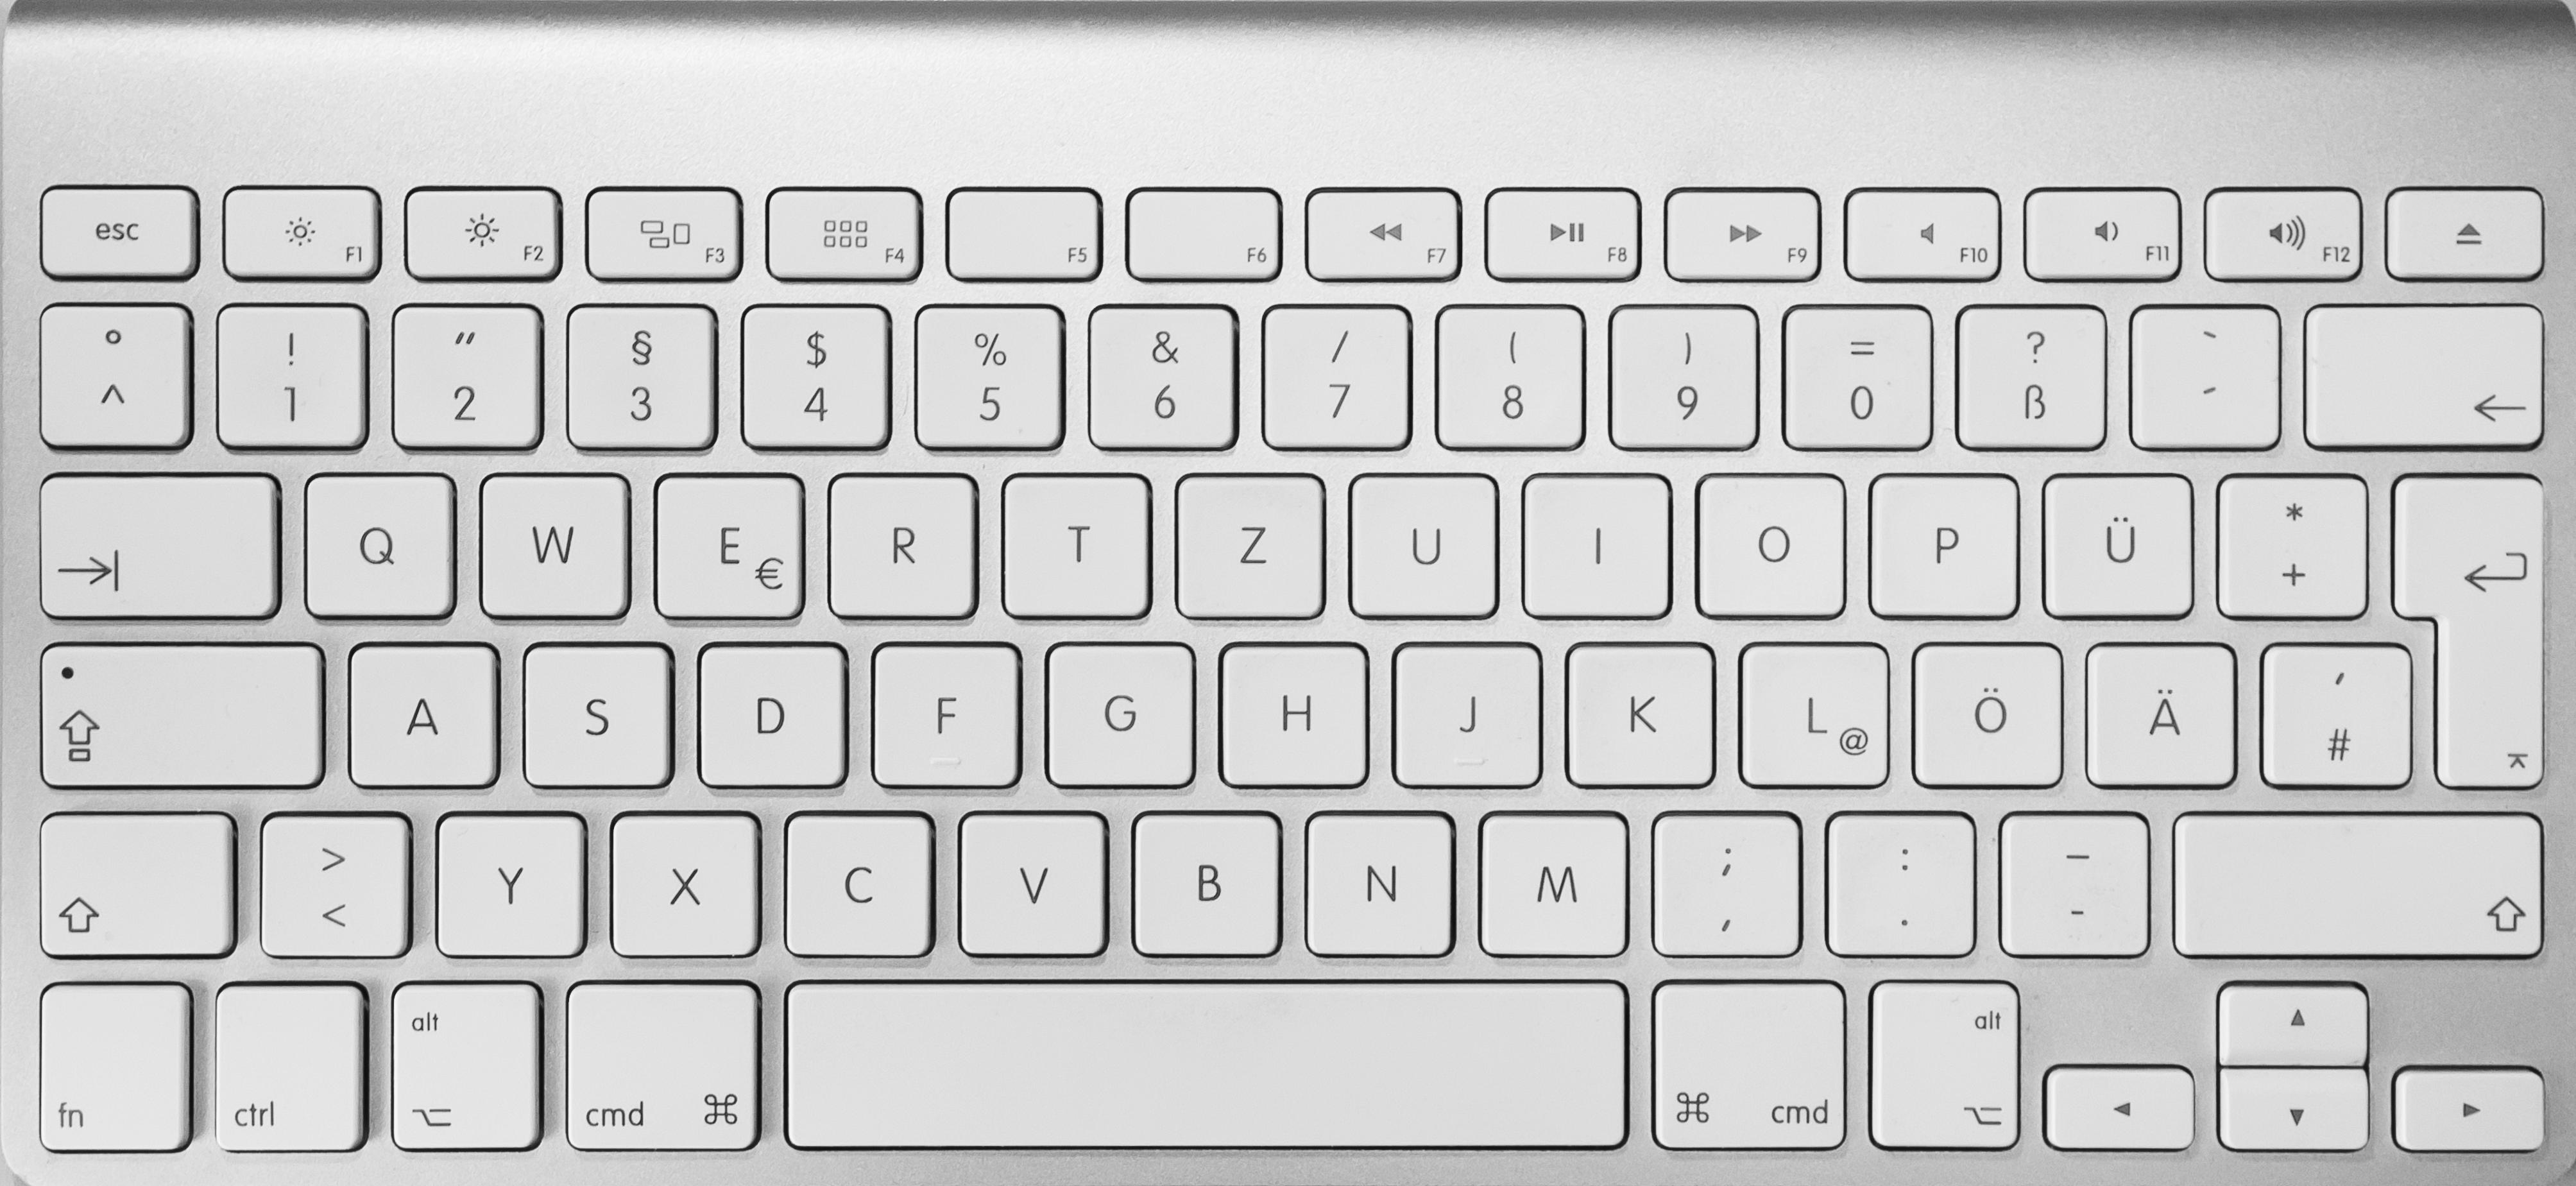 mac keyboard layout for windows 10